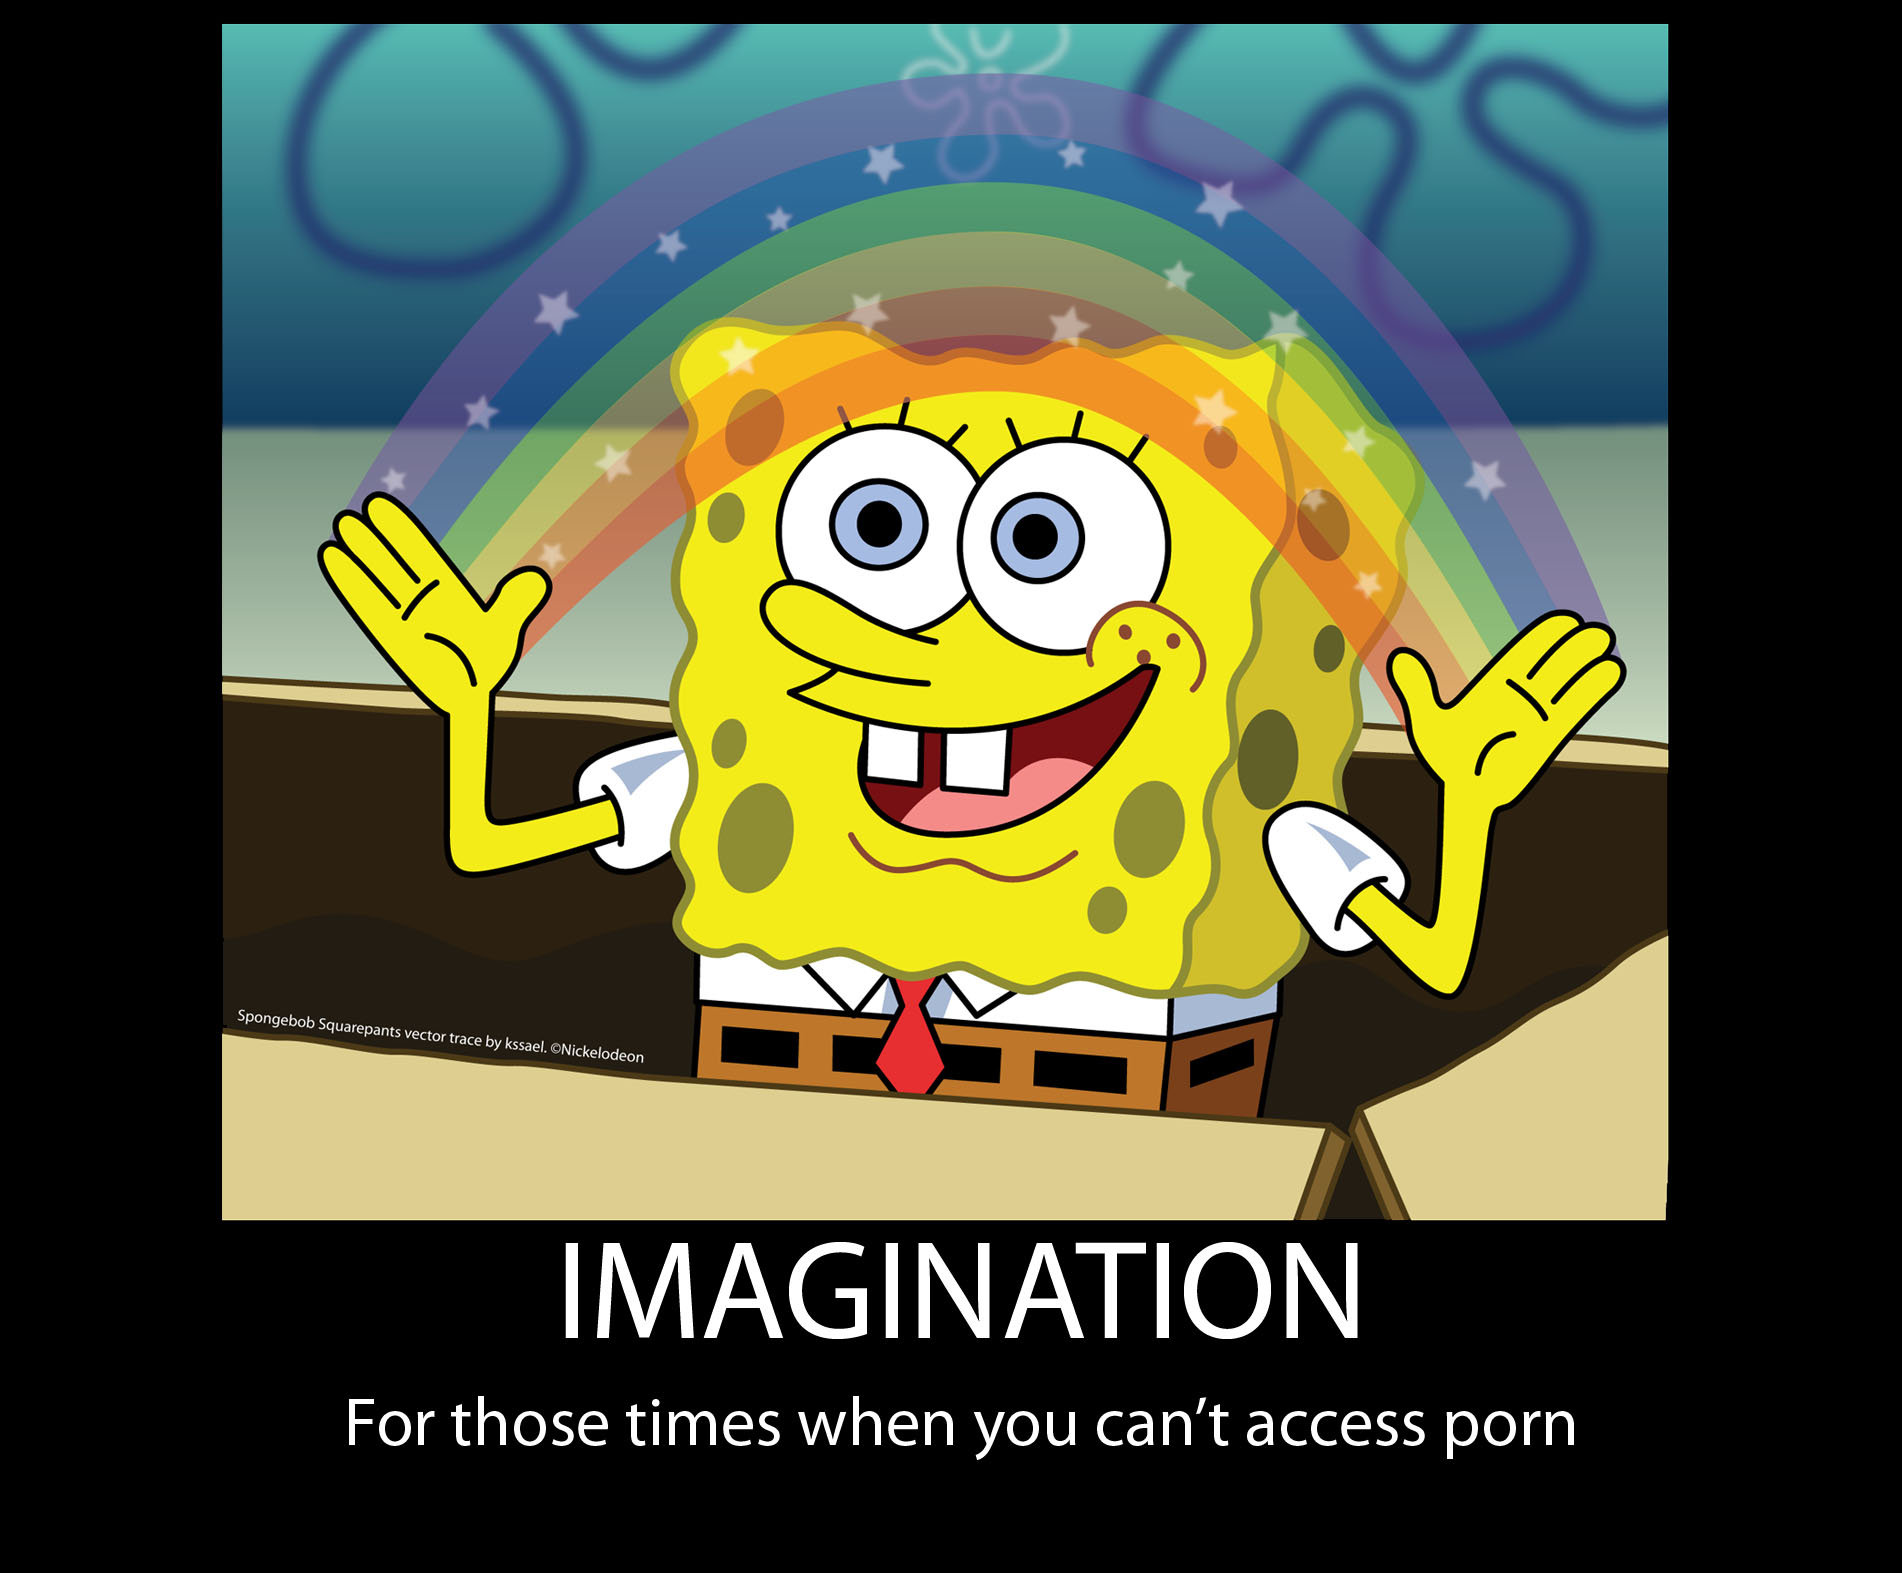 Spongebob Imagination Meme